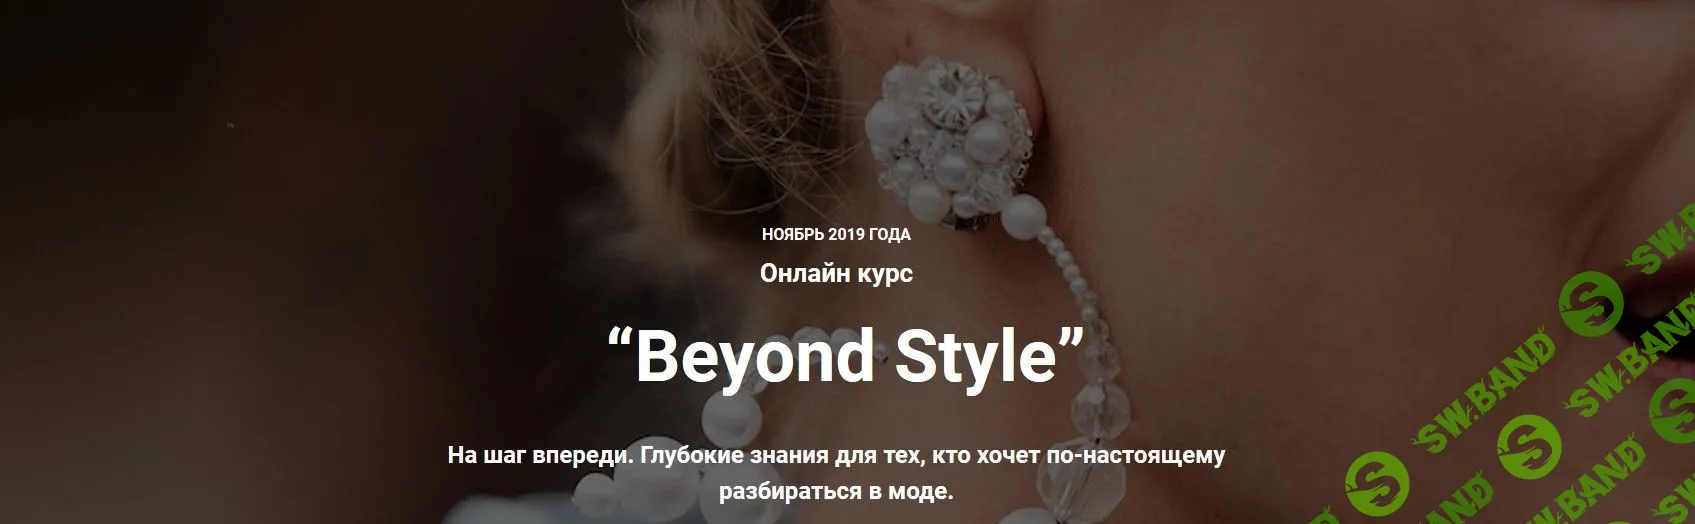 [Ванда Вонг, Иpина Пpaневская] Beyond Style (2019)